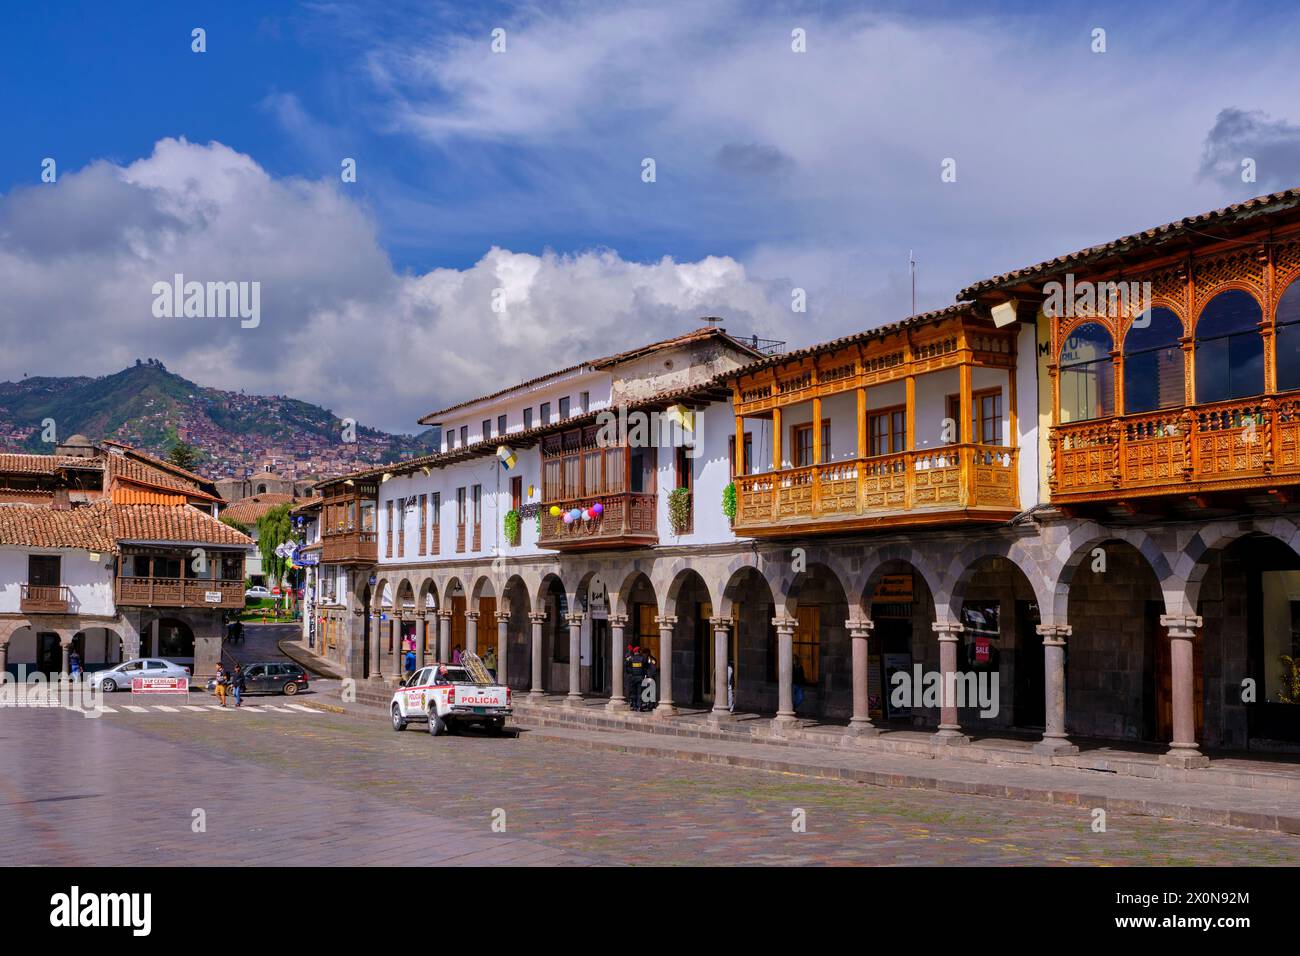 Peru, province of Cuzco, Cuzco, listed as a UNESCO World Heritage Site, Plaza de Armas Stock Photo